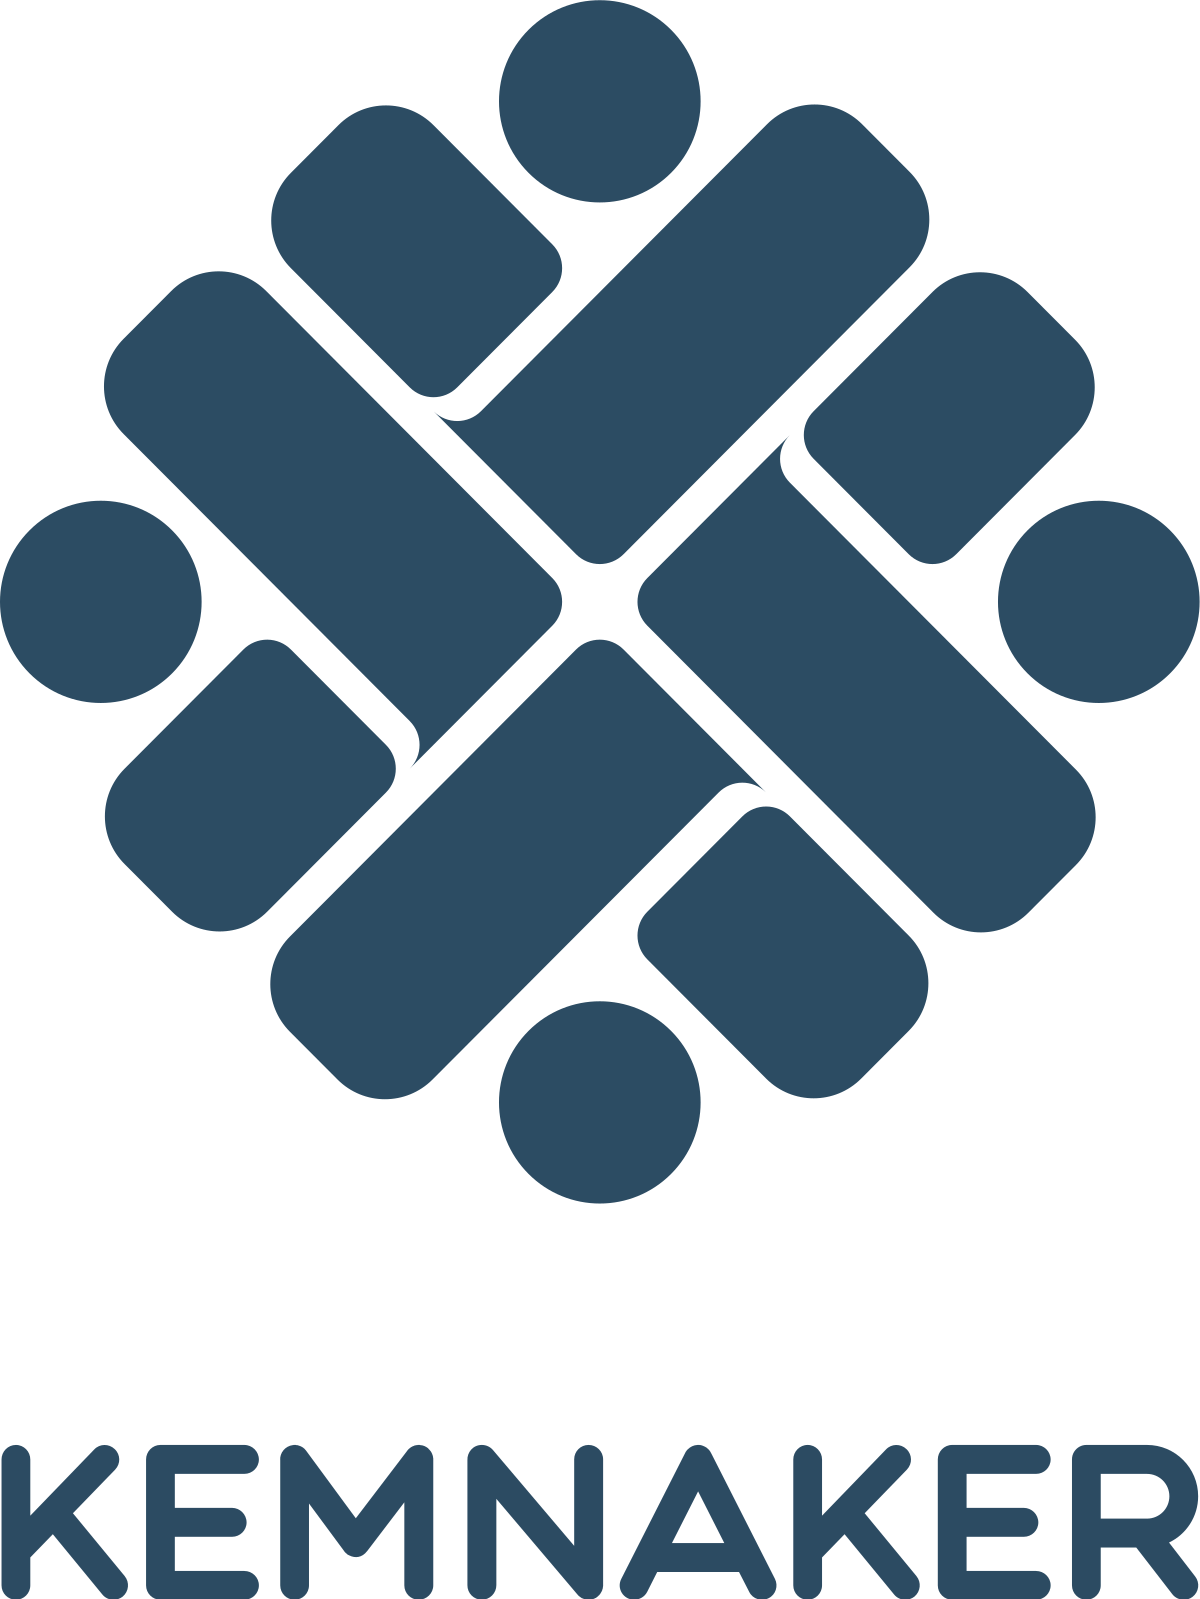 BMET Logo Vector | Bureau of Manpower Employment and Training logo design |  BMET logo png - Fine Vector Art